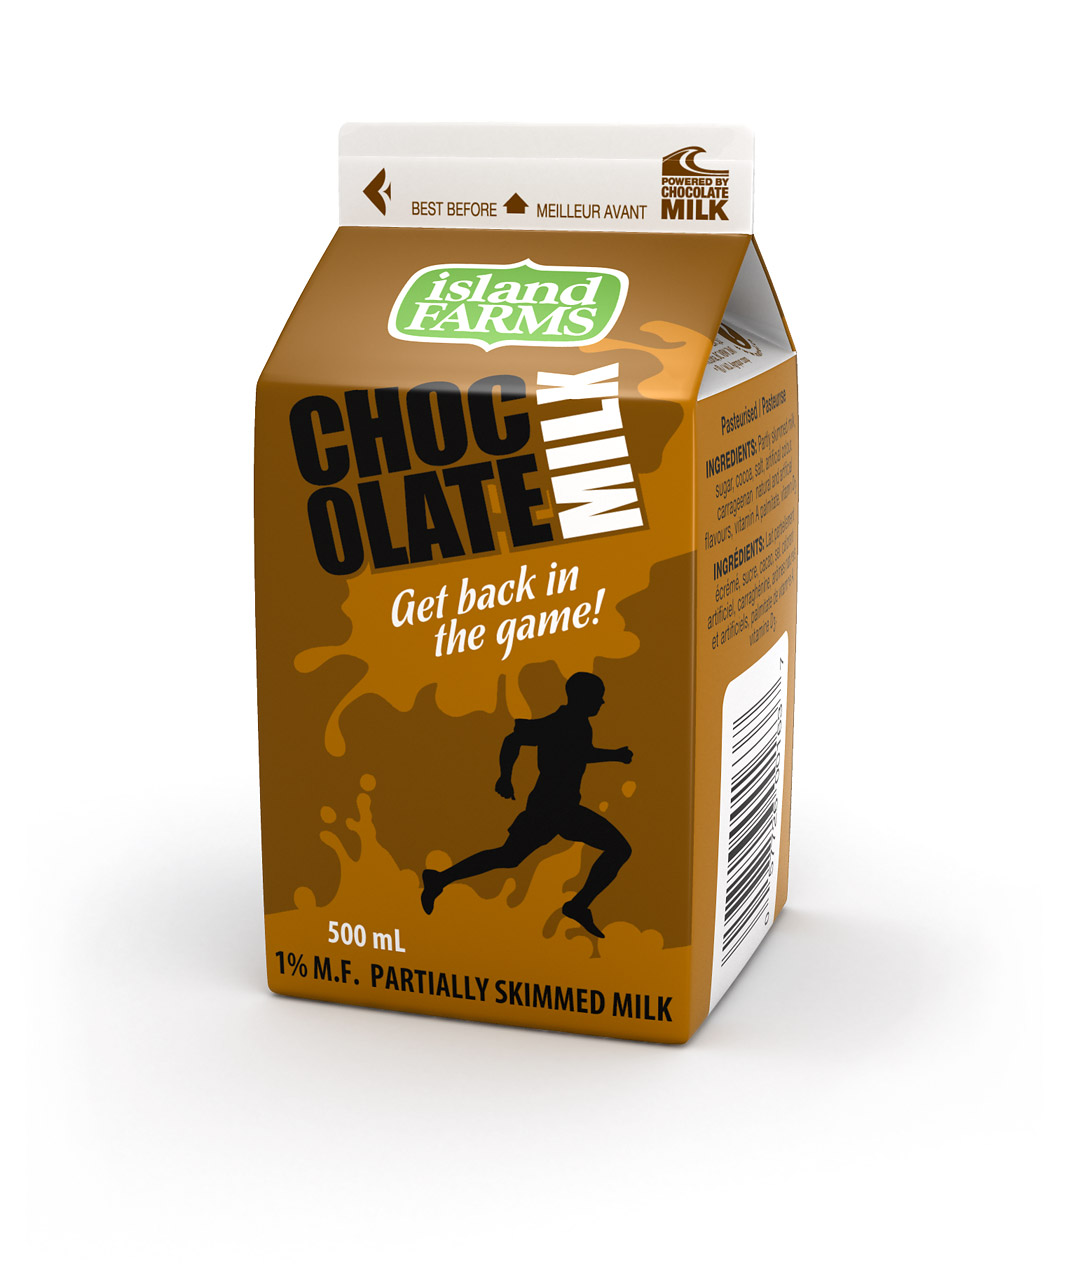 Product rendering: Milk carton